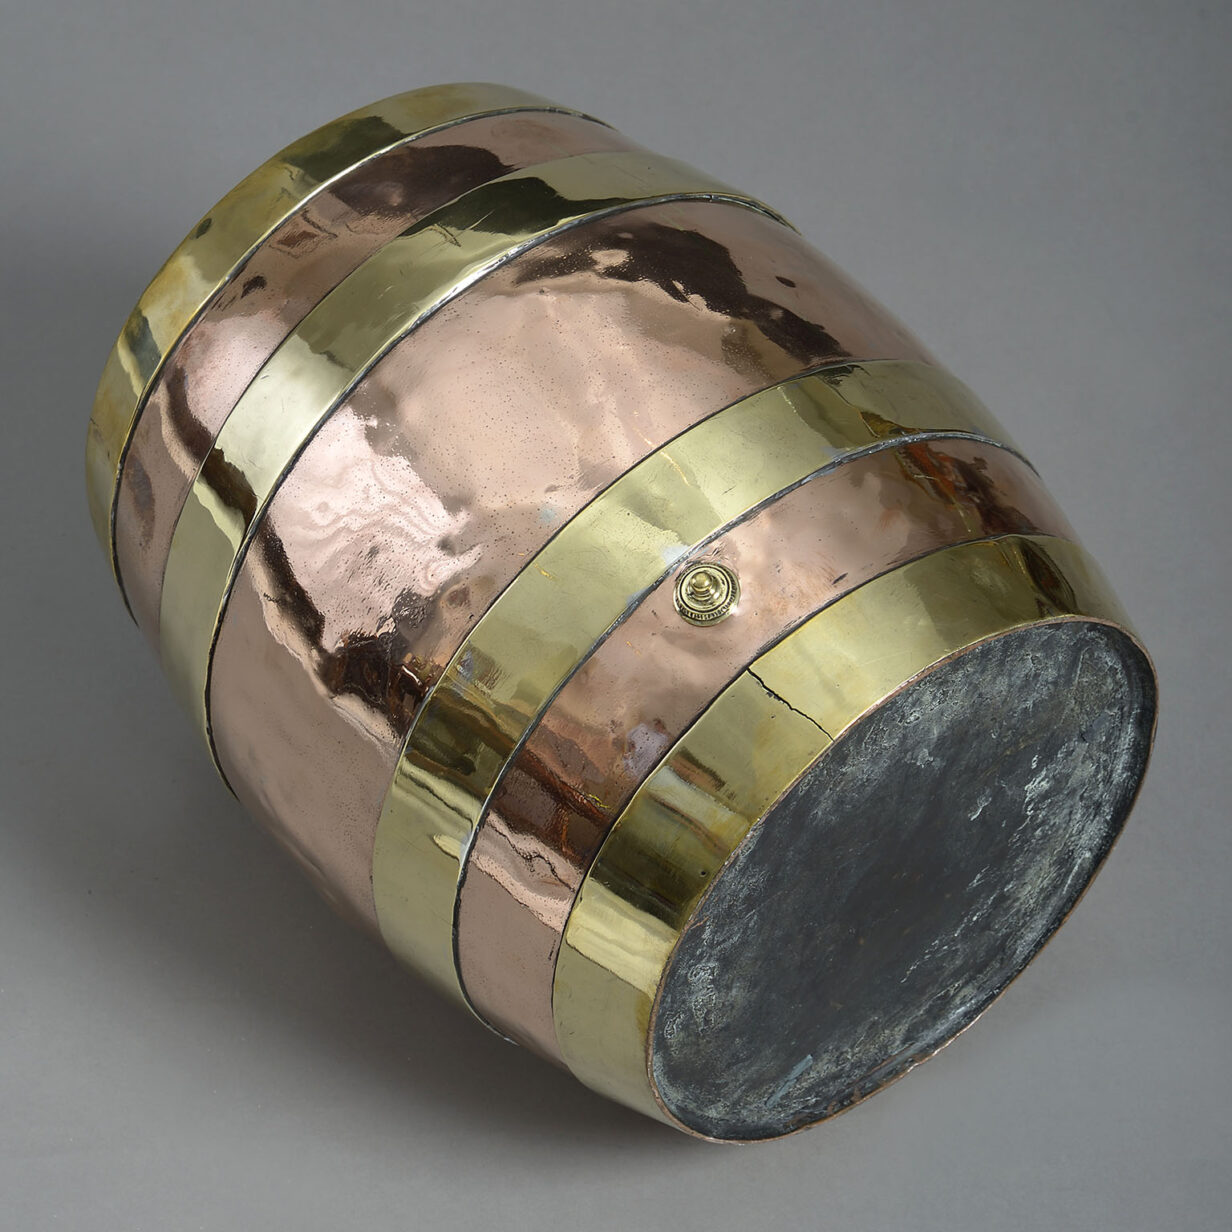 Brass and copper log bin